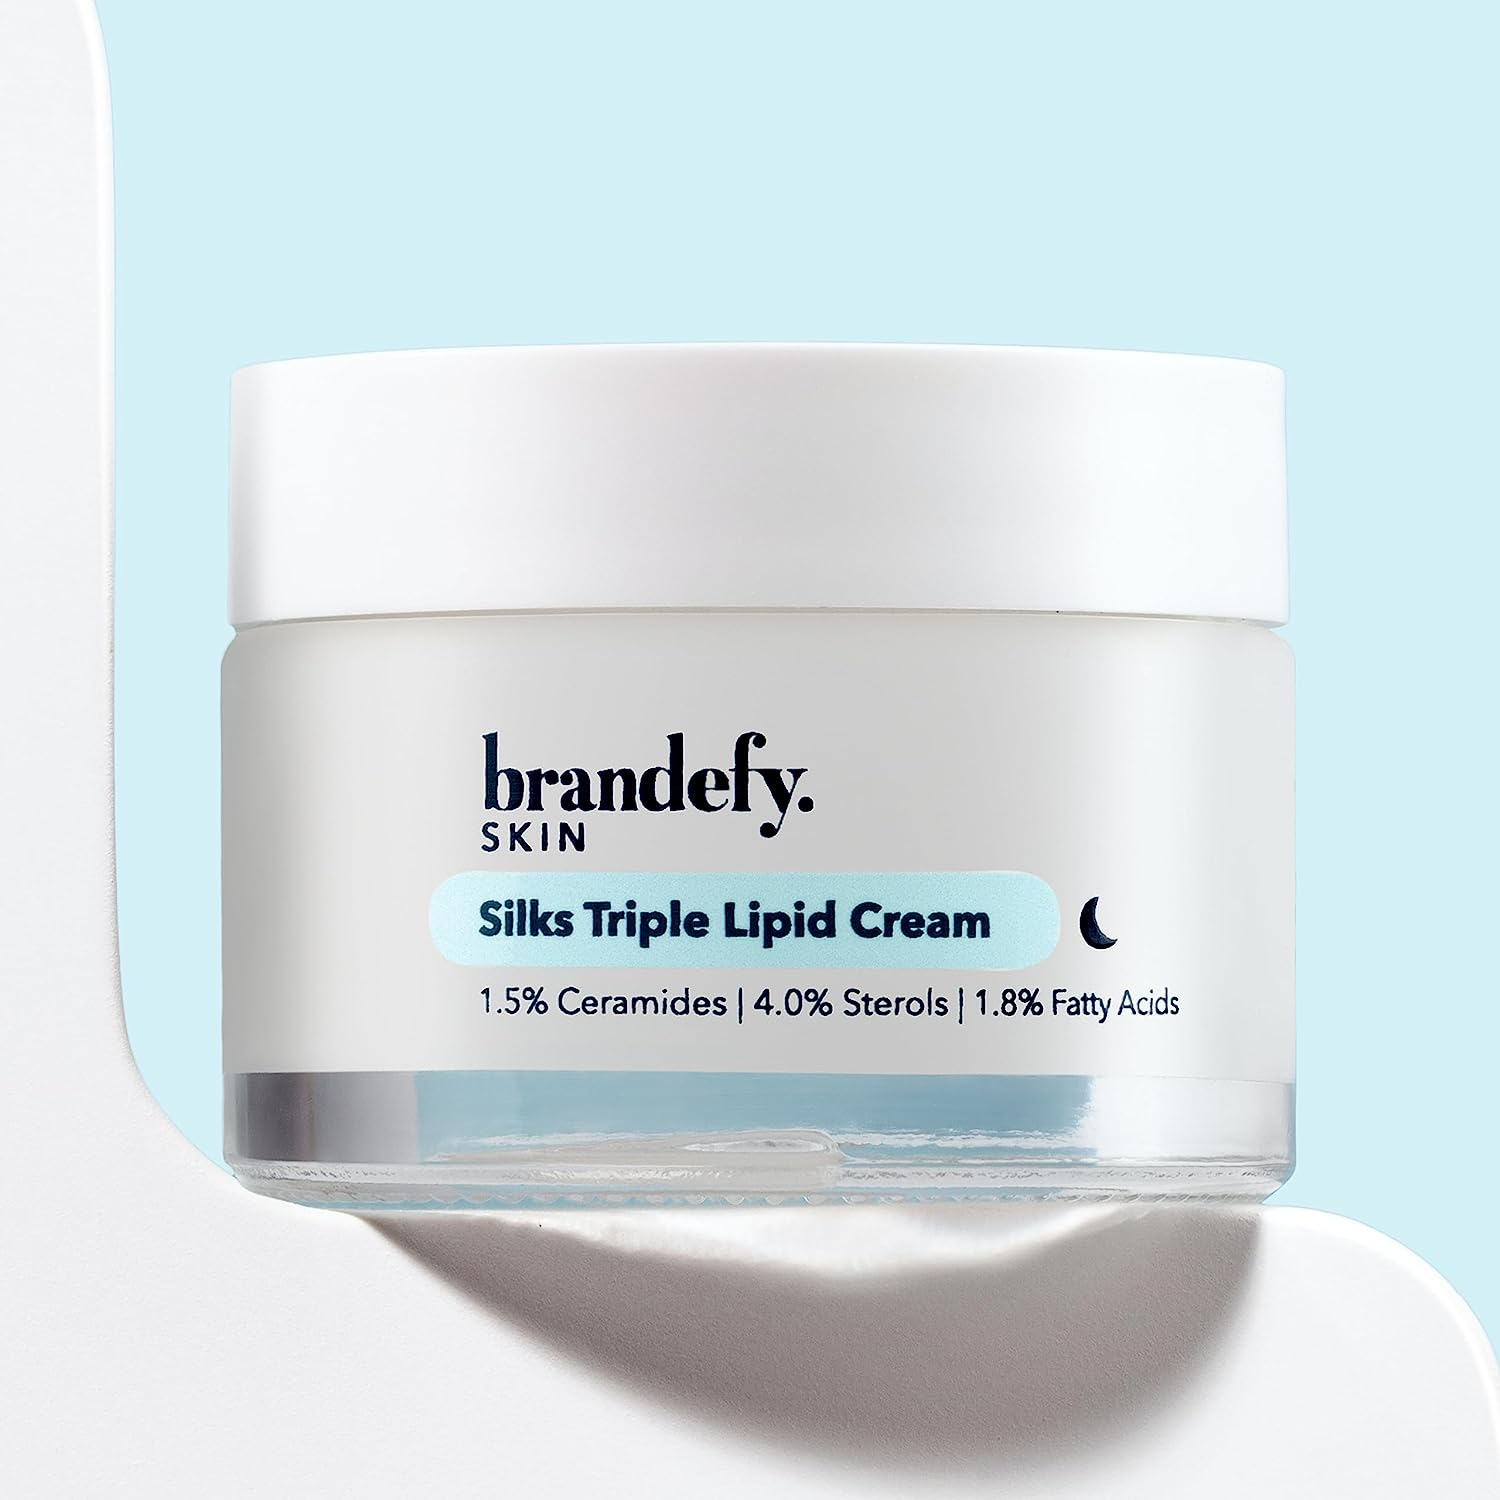 Brandefy Silks Triple Lipid Peptide Cream Review